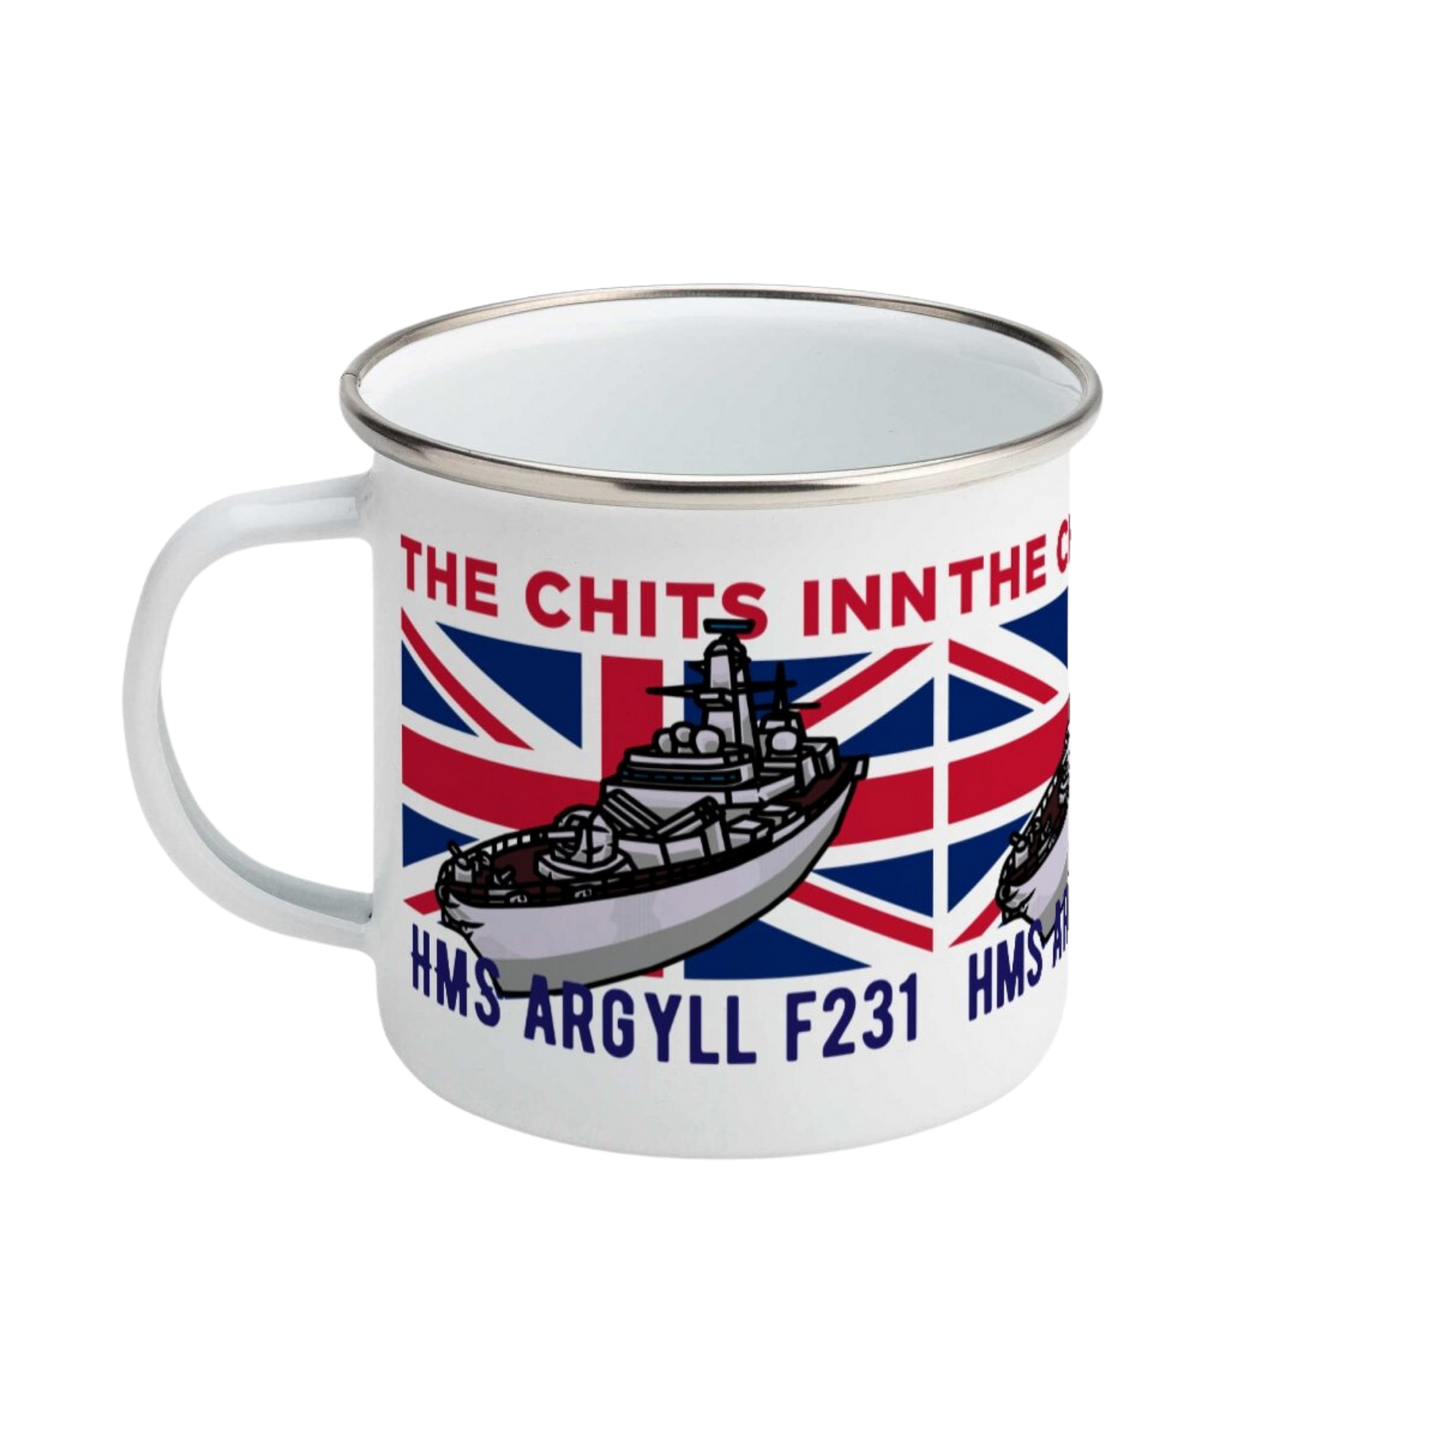 HMS Argyll F231 Enamel Mug